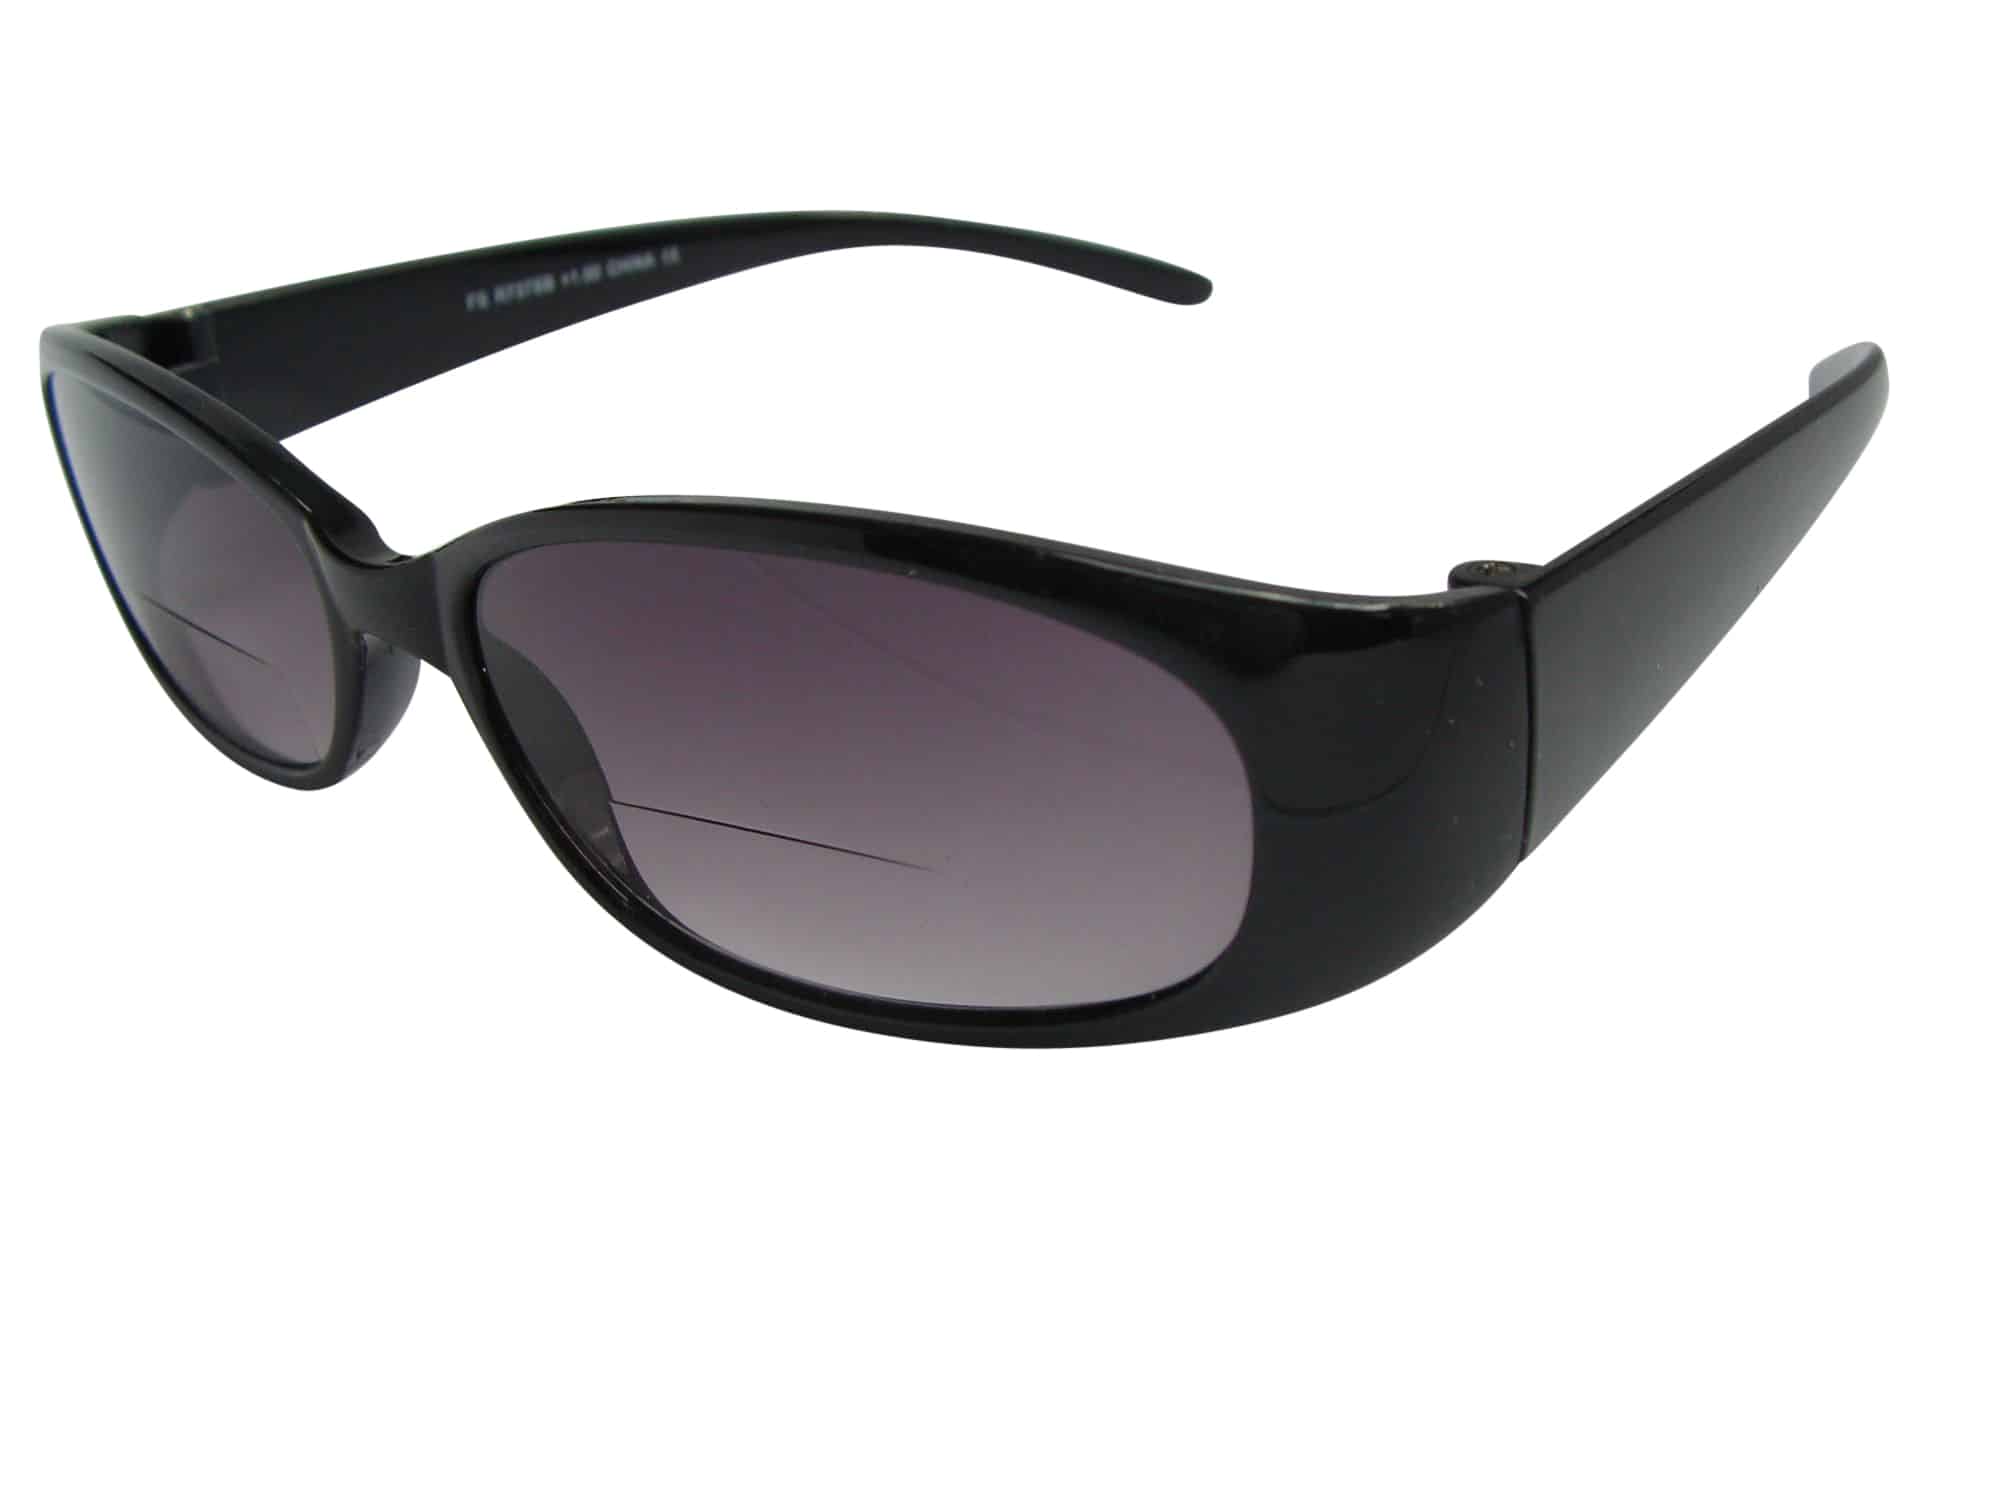 Reina Bifocal Sunglasses in Black